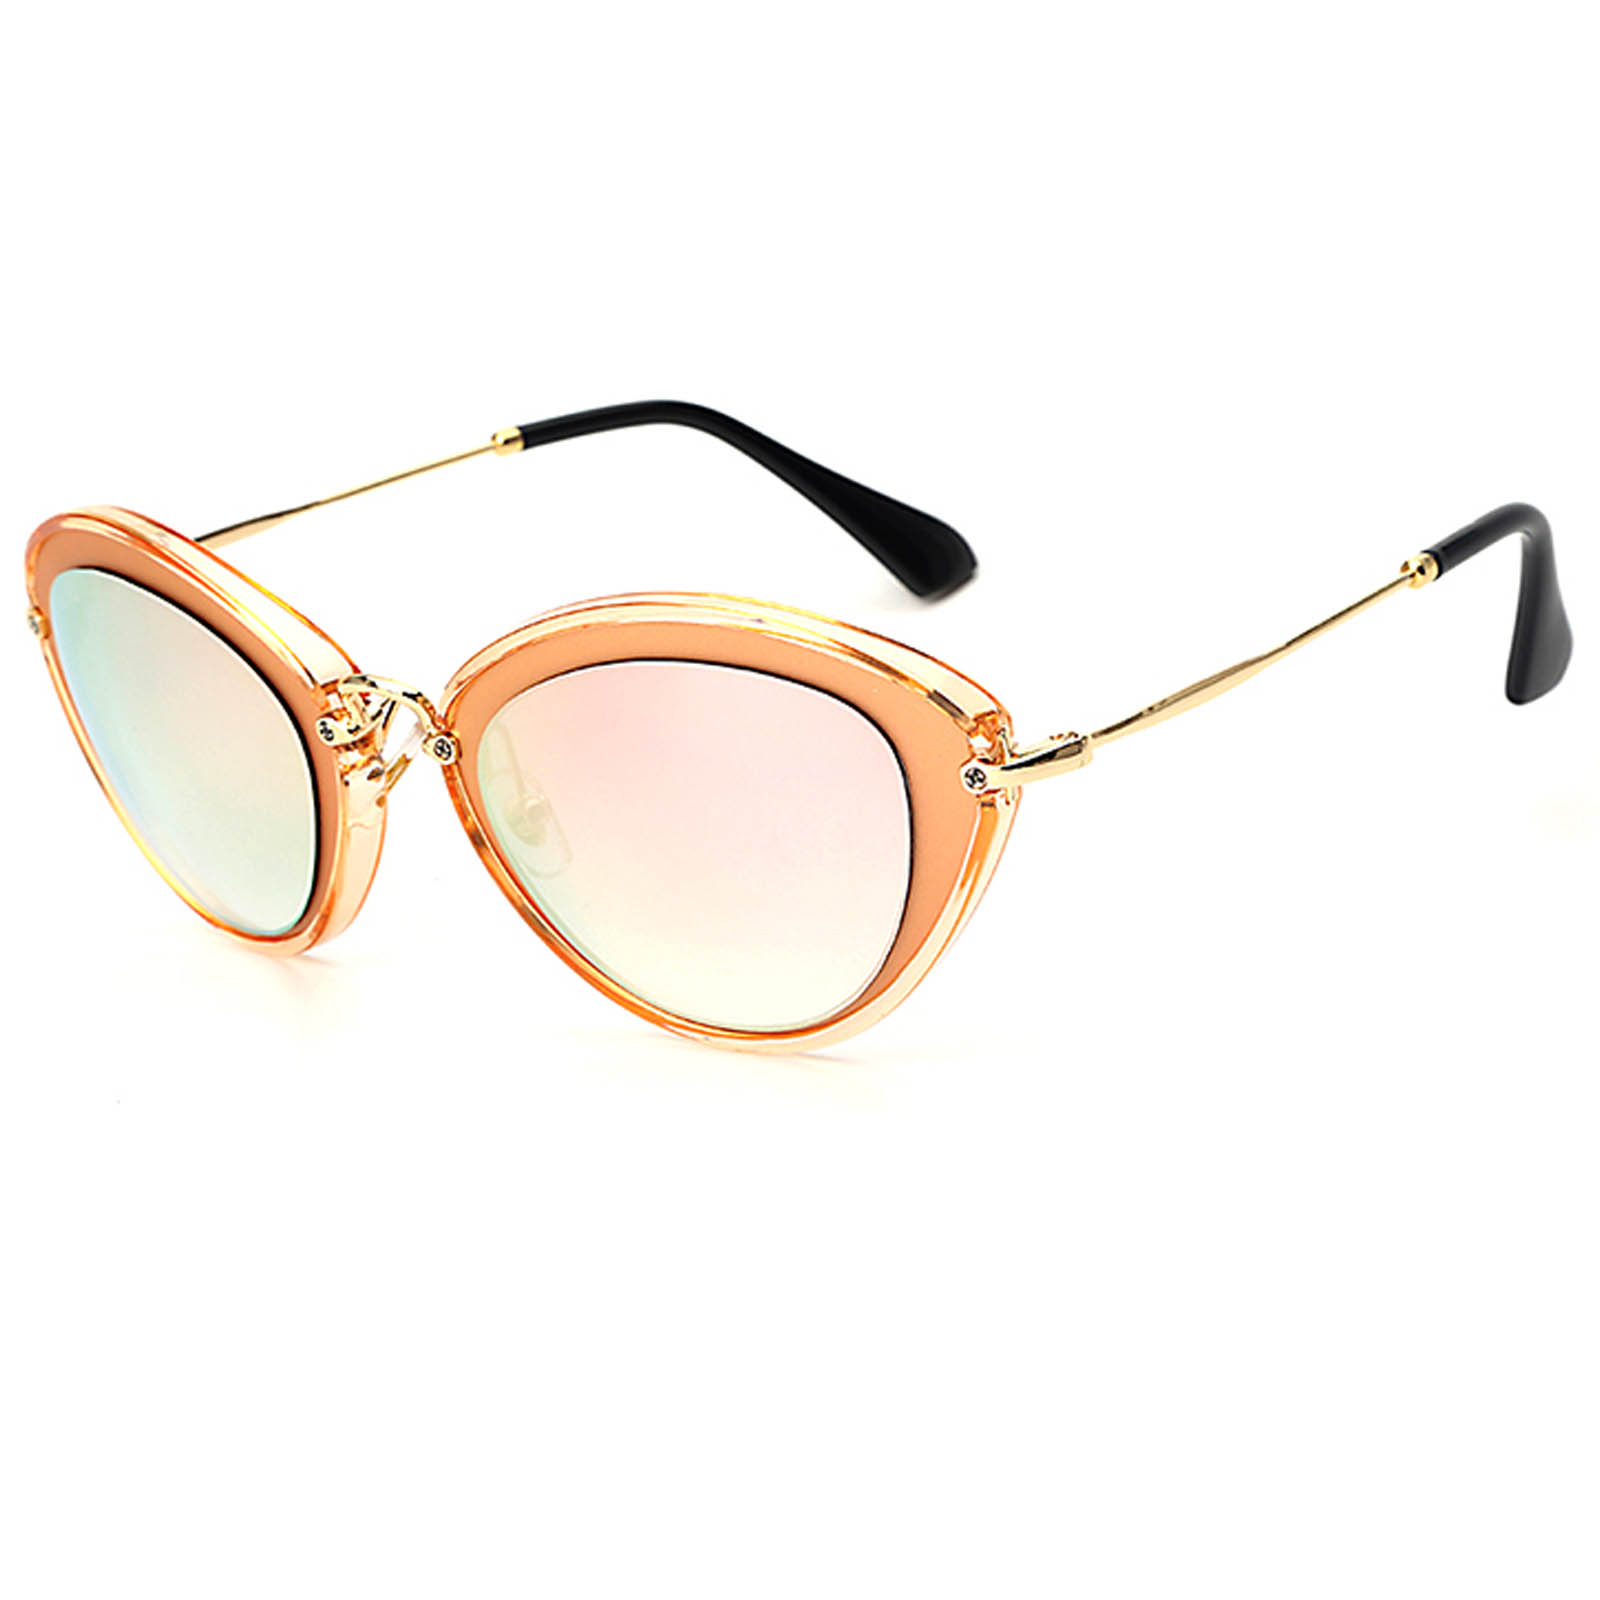 OWL ® 003 C5 Cat Eyewear Sunglasses Women's Men's Metal Orange Frame ...